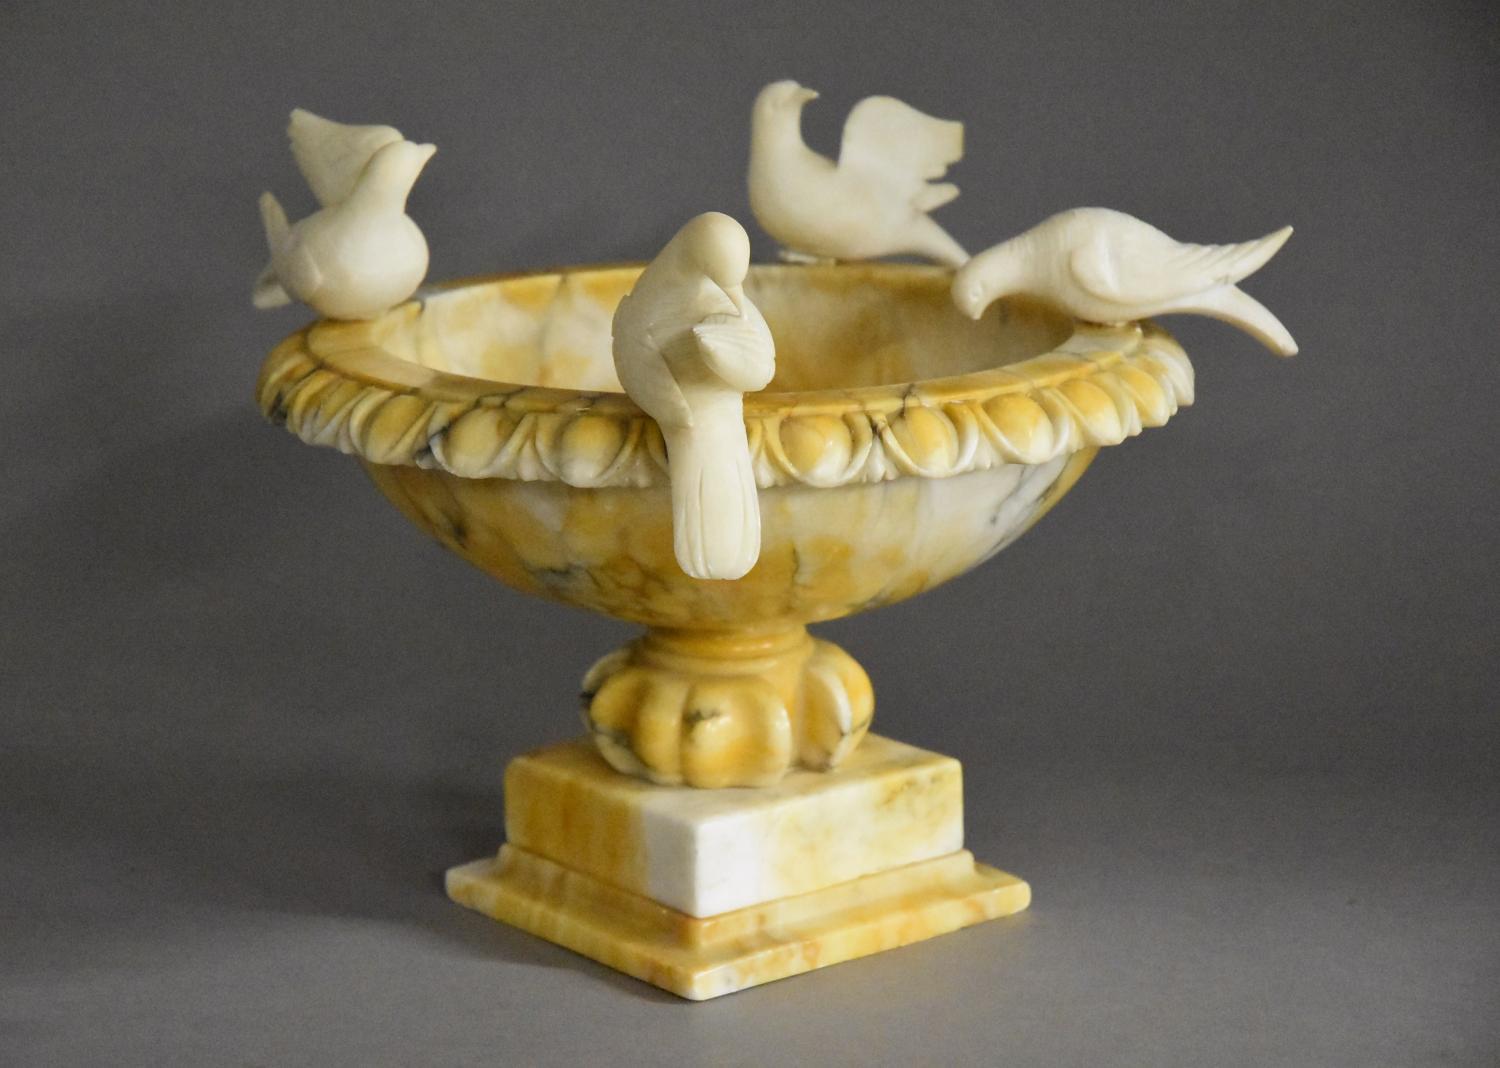 Late 19th century alabaster tazza or birdbath